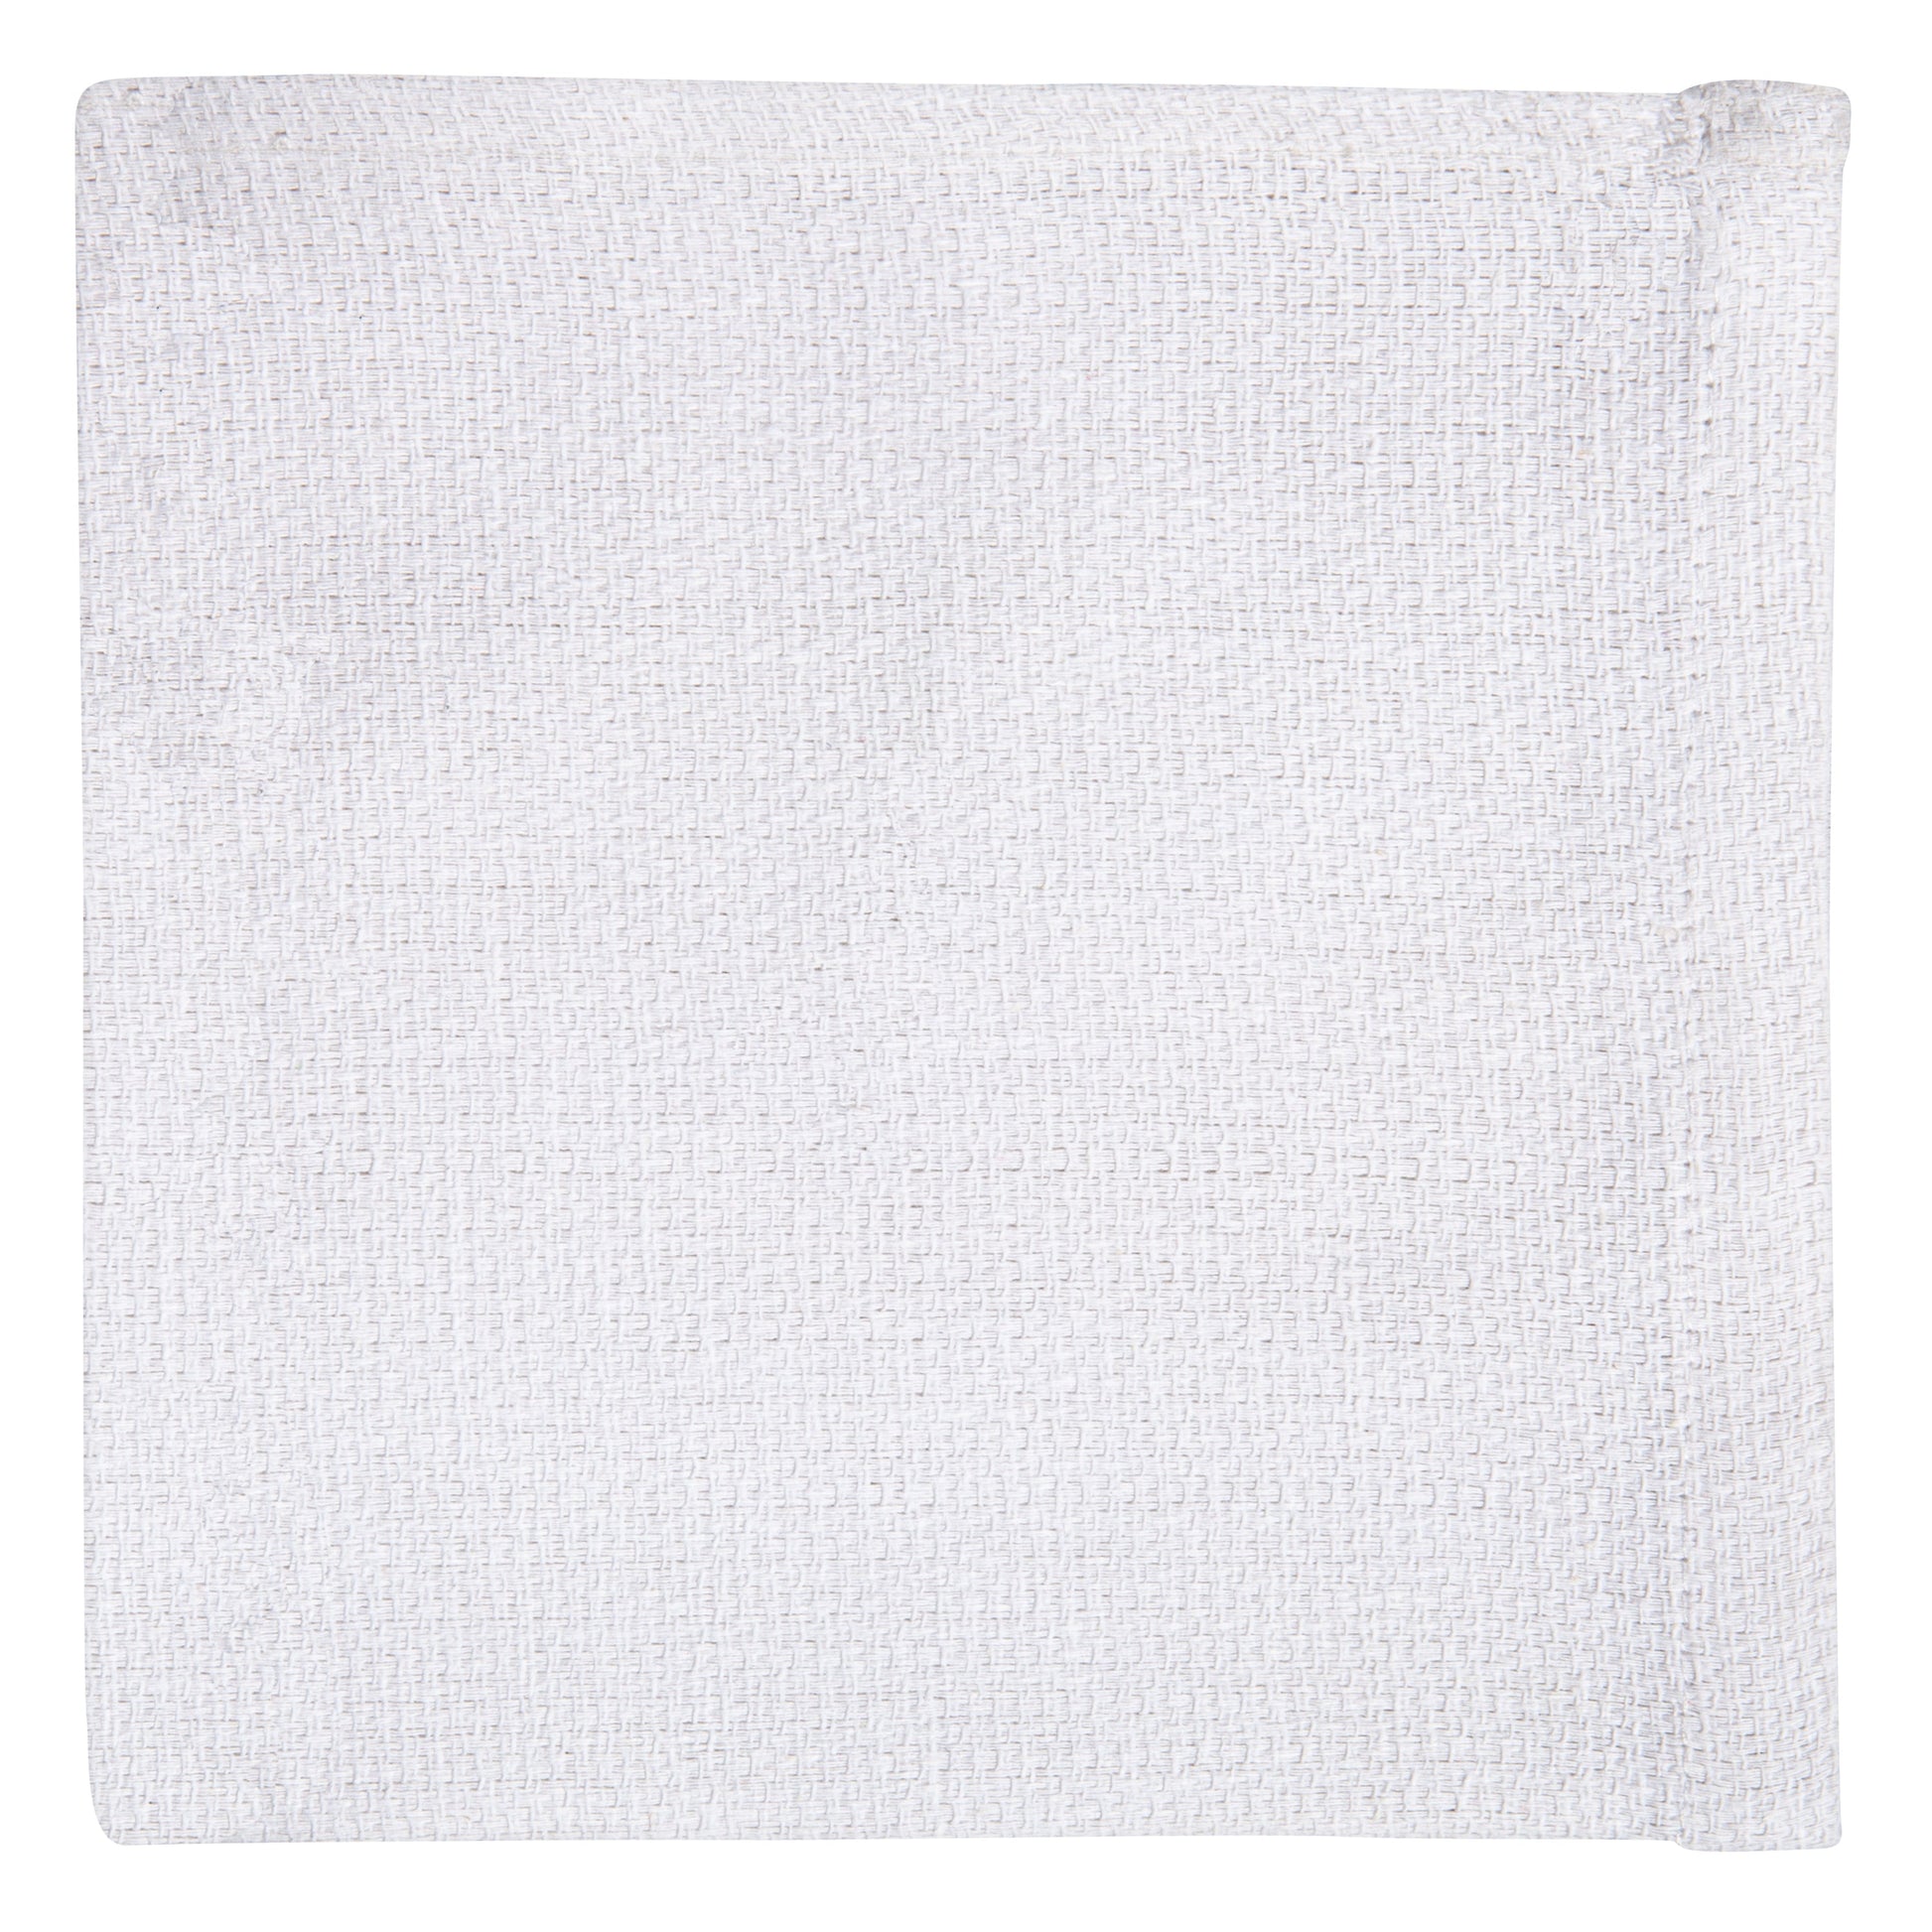 American Dawn | 15X30 Inch White Healthcare Towel | Hand Towel